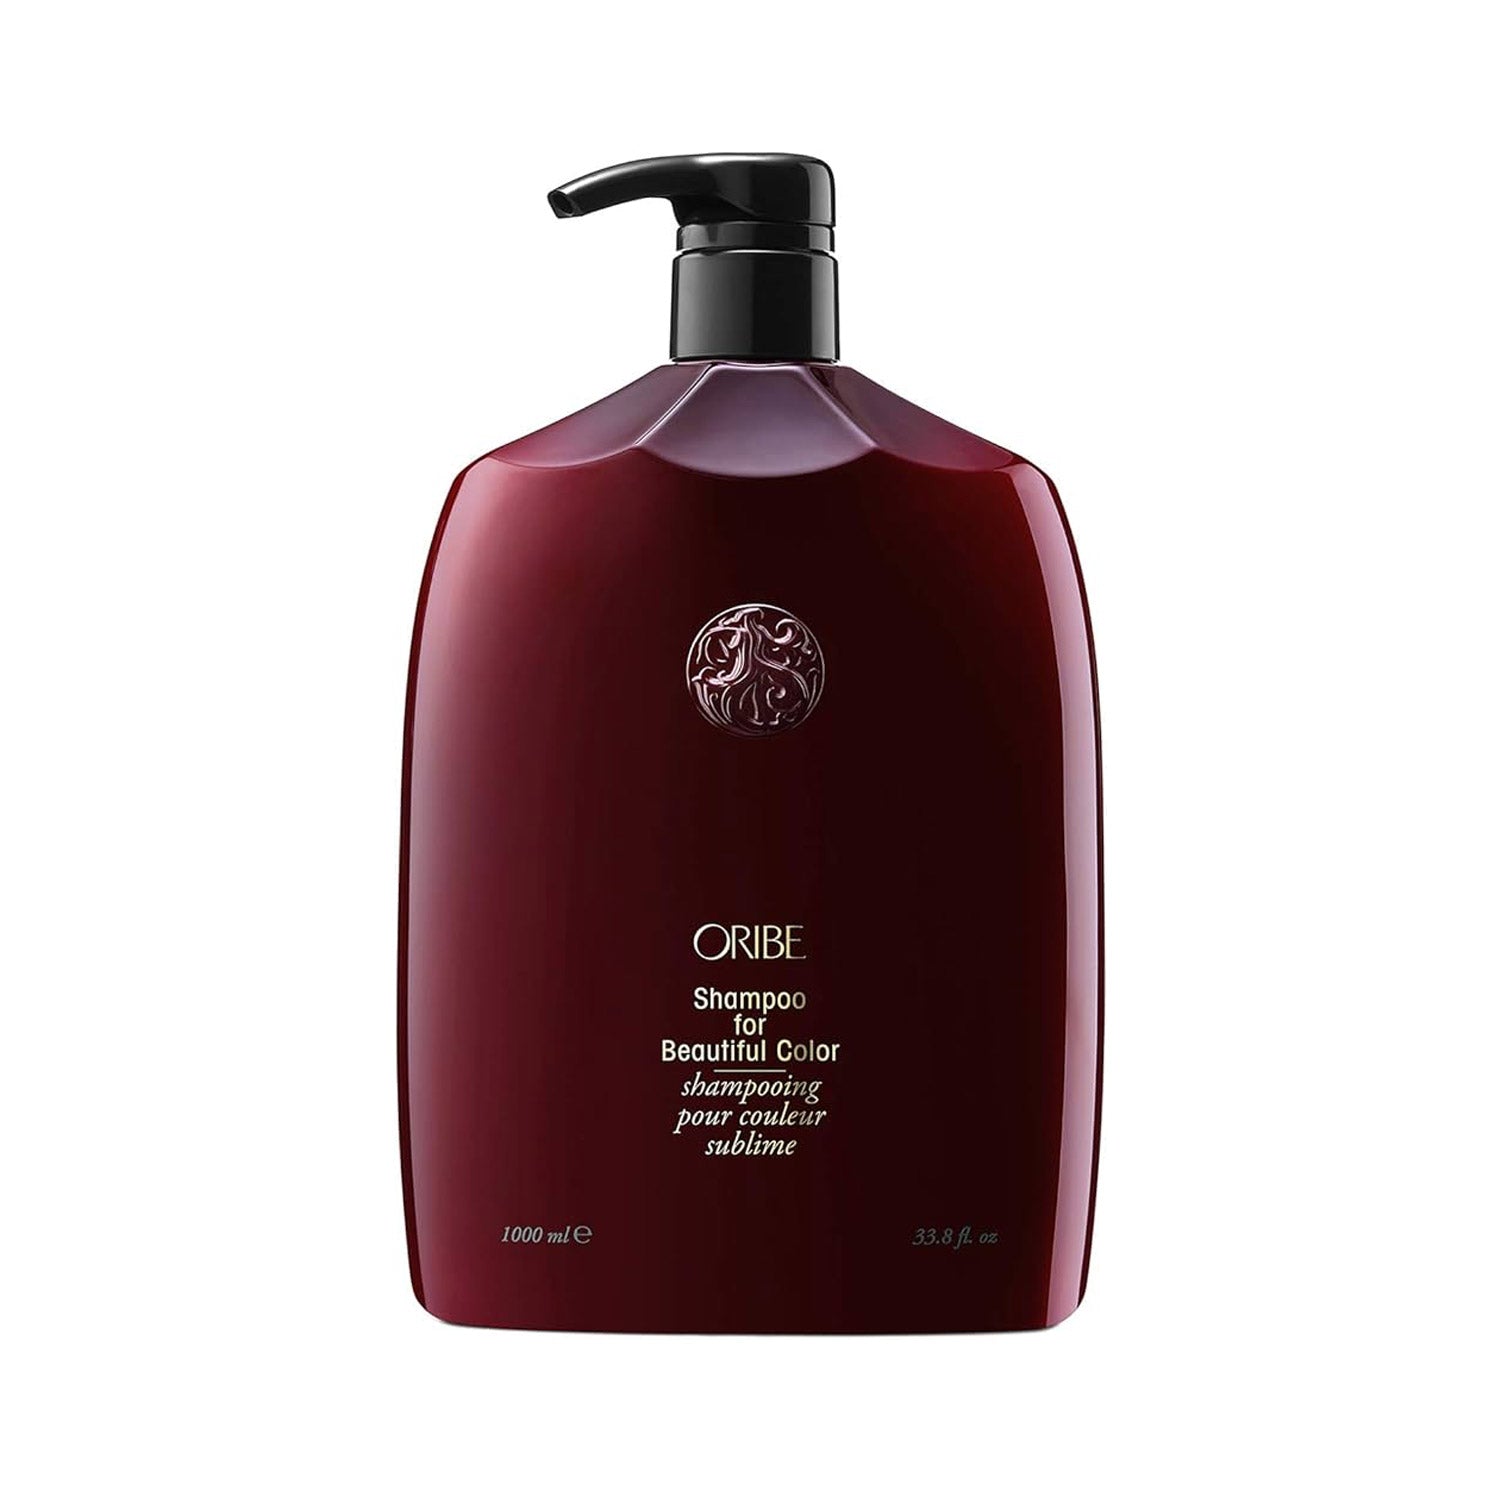 ORIBE - Shampoo for sublime color